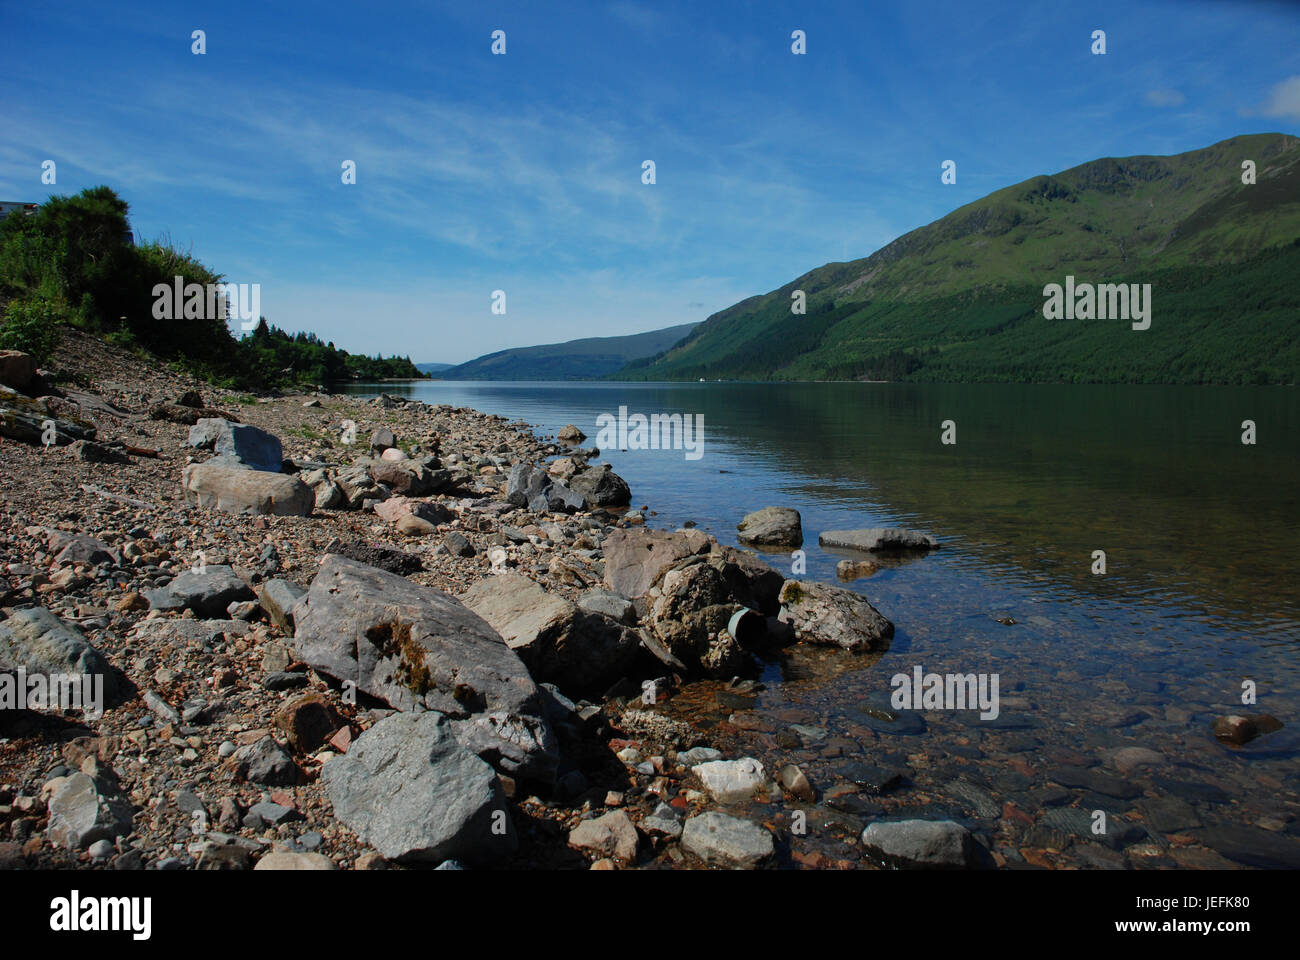 Scotland's Loch Lochy is a large freshwater loch in Lochaber Highland Scotland. It has a mean depth of 70m. Photo taken June 2017 Stock Photo